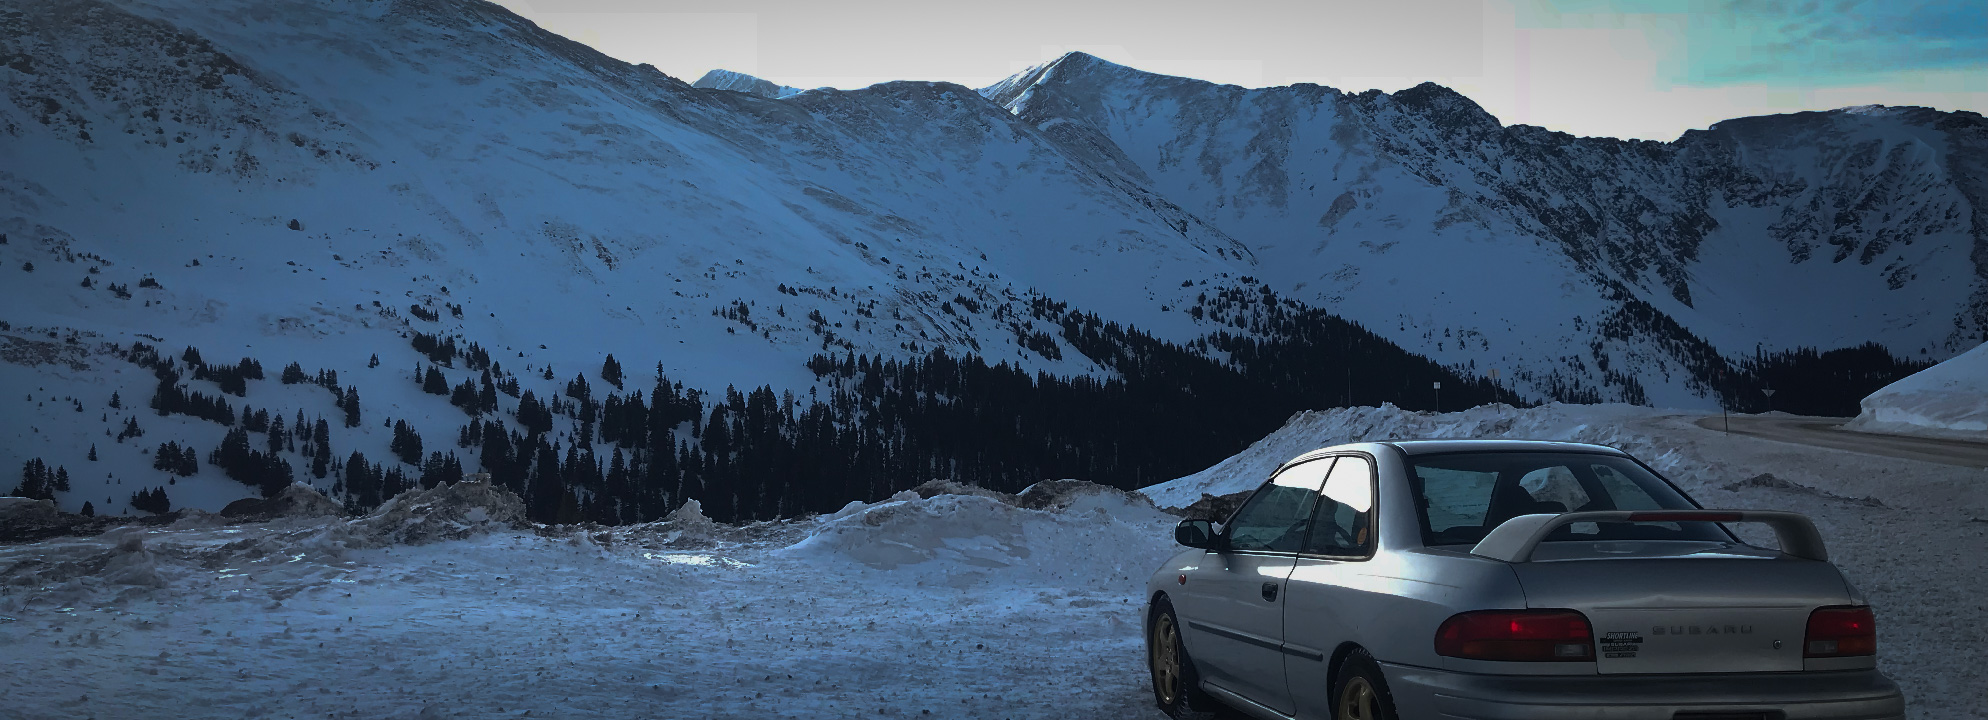 Subaru in the mountains